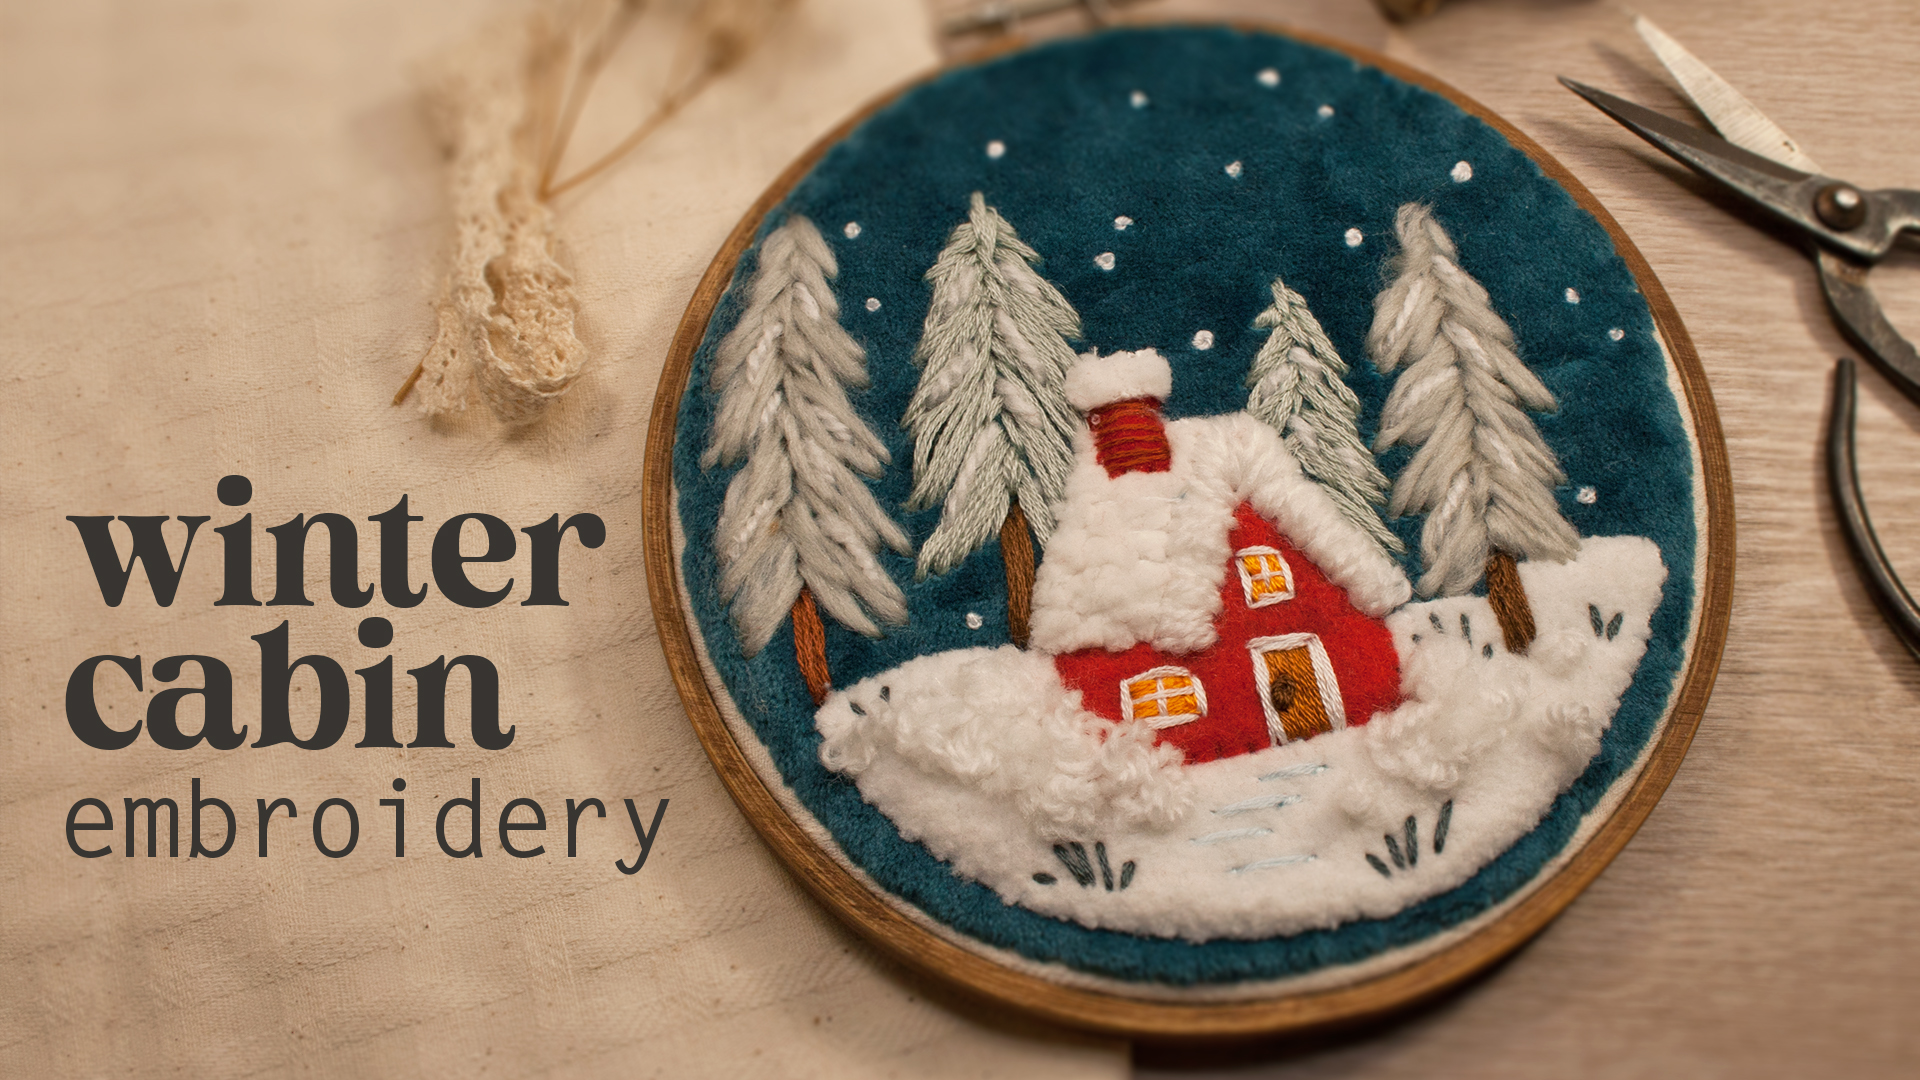 Winter Cabin (embroidery)